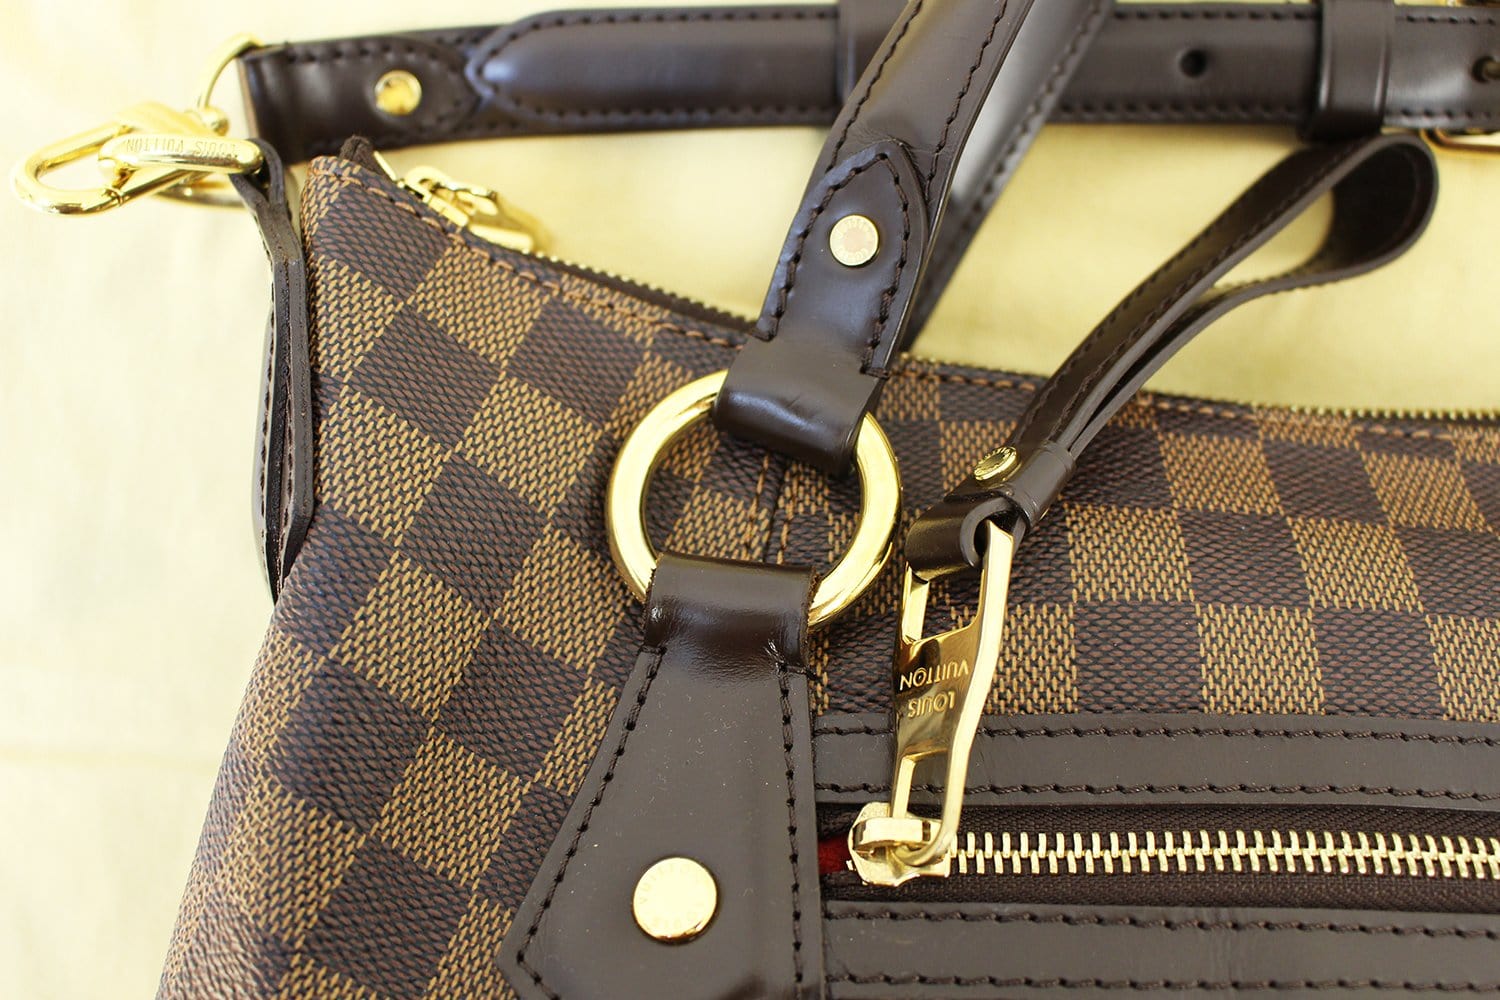 The Louis Vuitton Evora Bag: Sophisticated Feminine